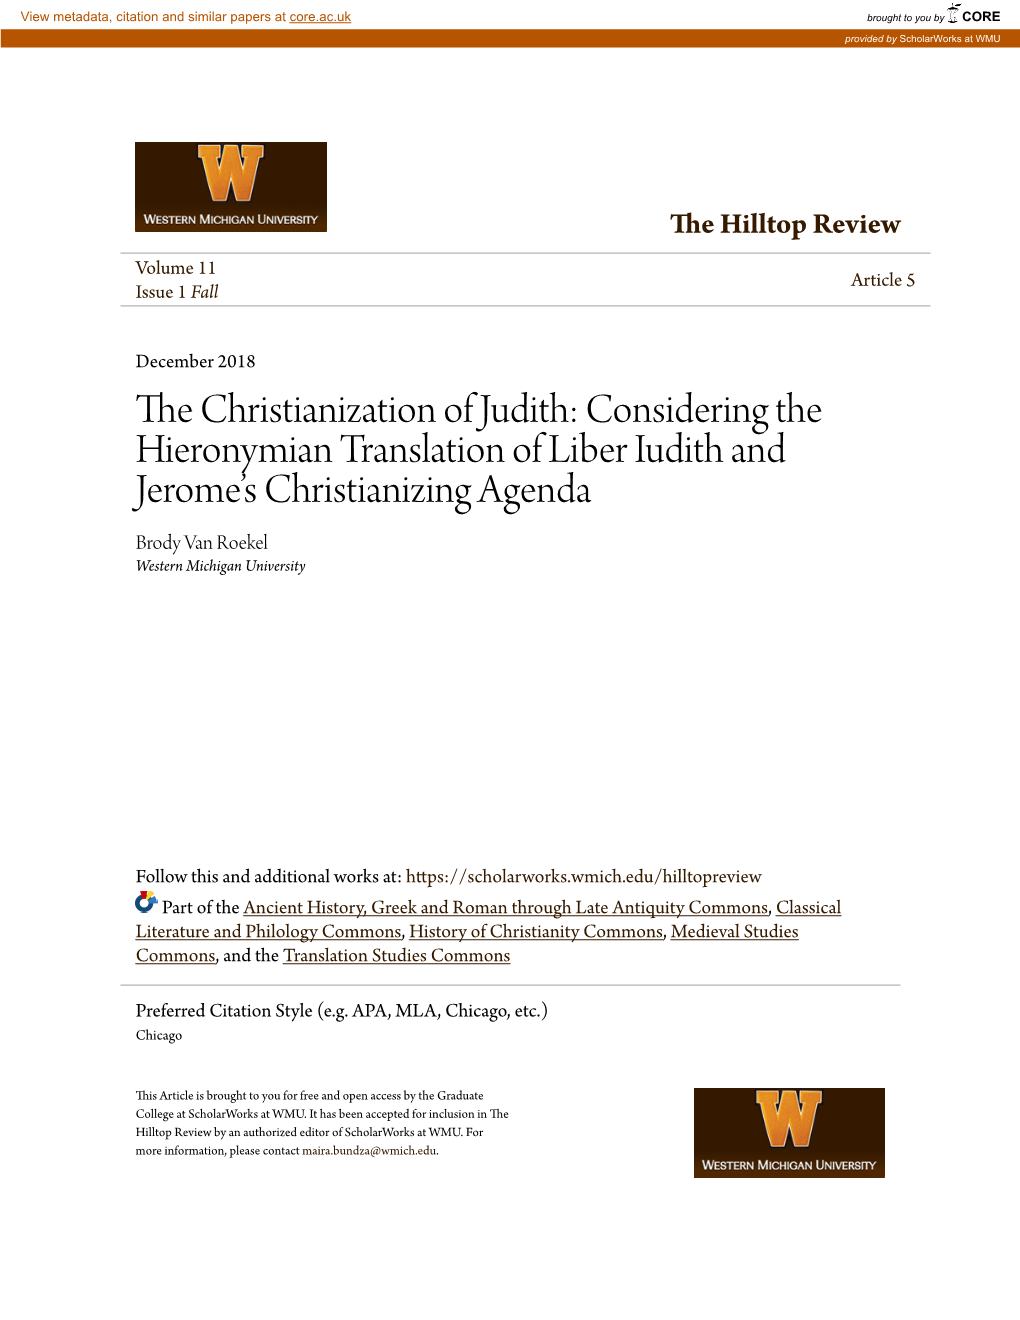 Considering the Hieronymian Translation of Liber Iudith and Jerome’S Christianizing Agenda Brody Van Roekel Western Michigan University